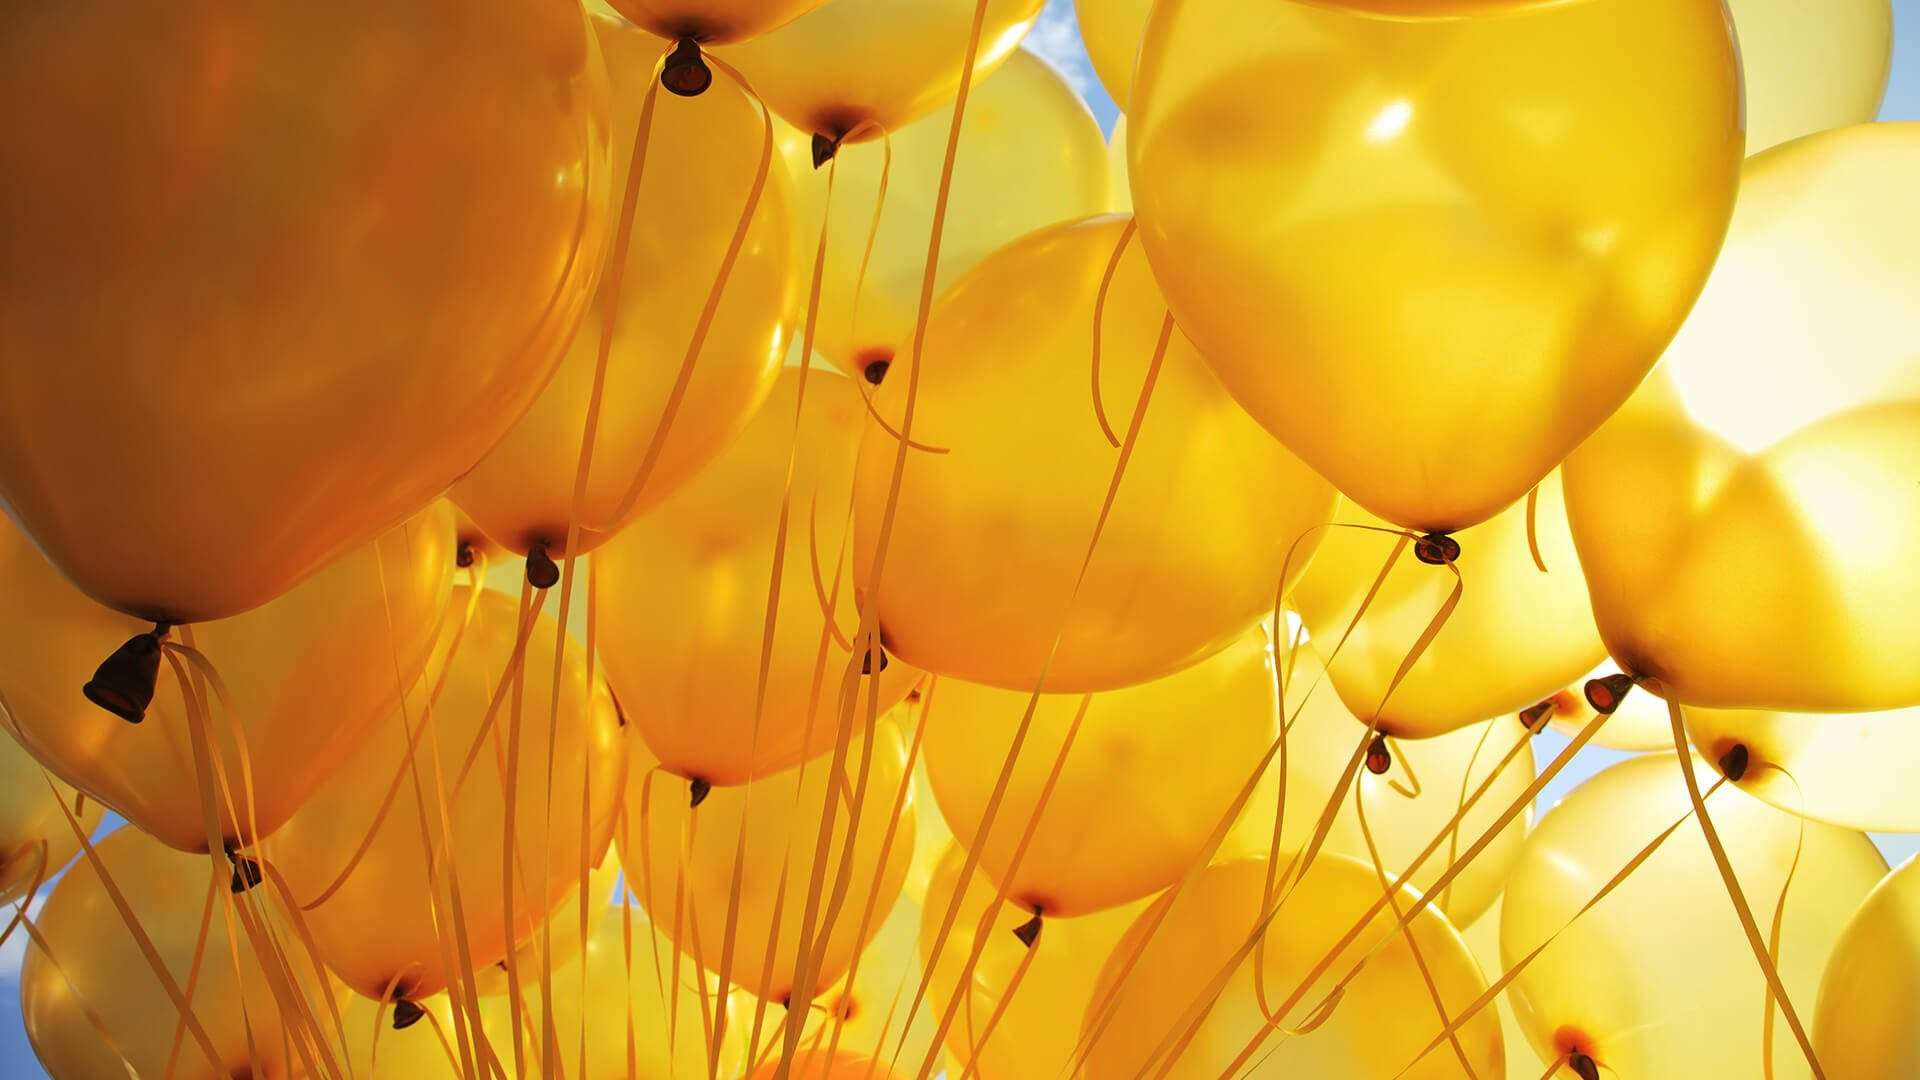 Glossy Pastel Yellow Balloons Wallpaper